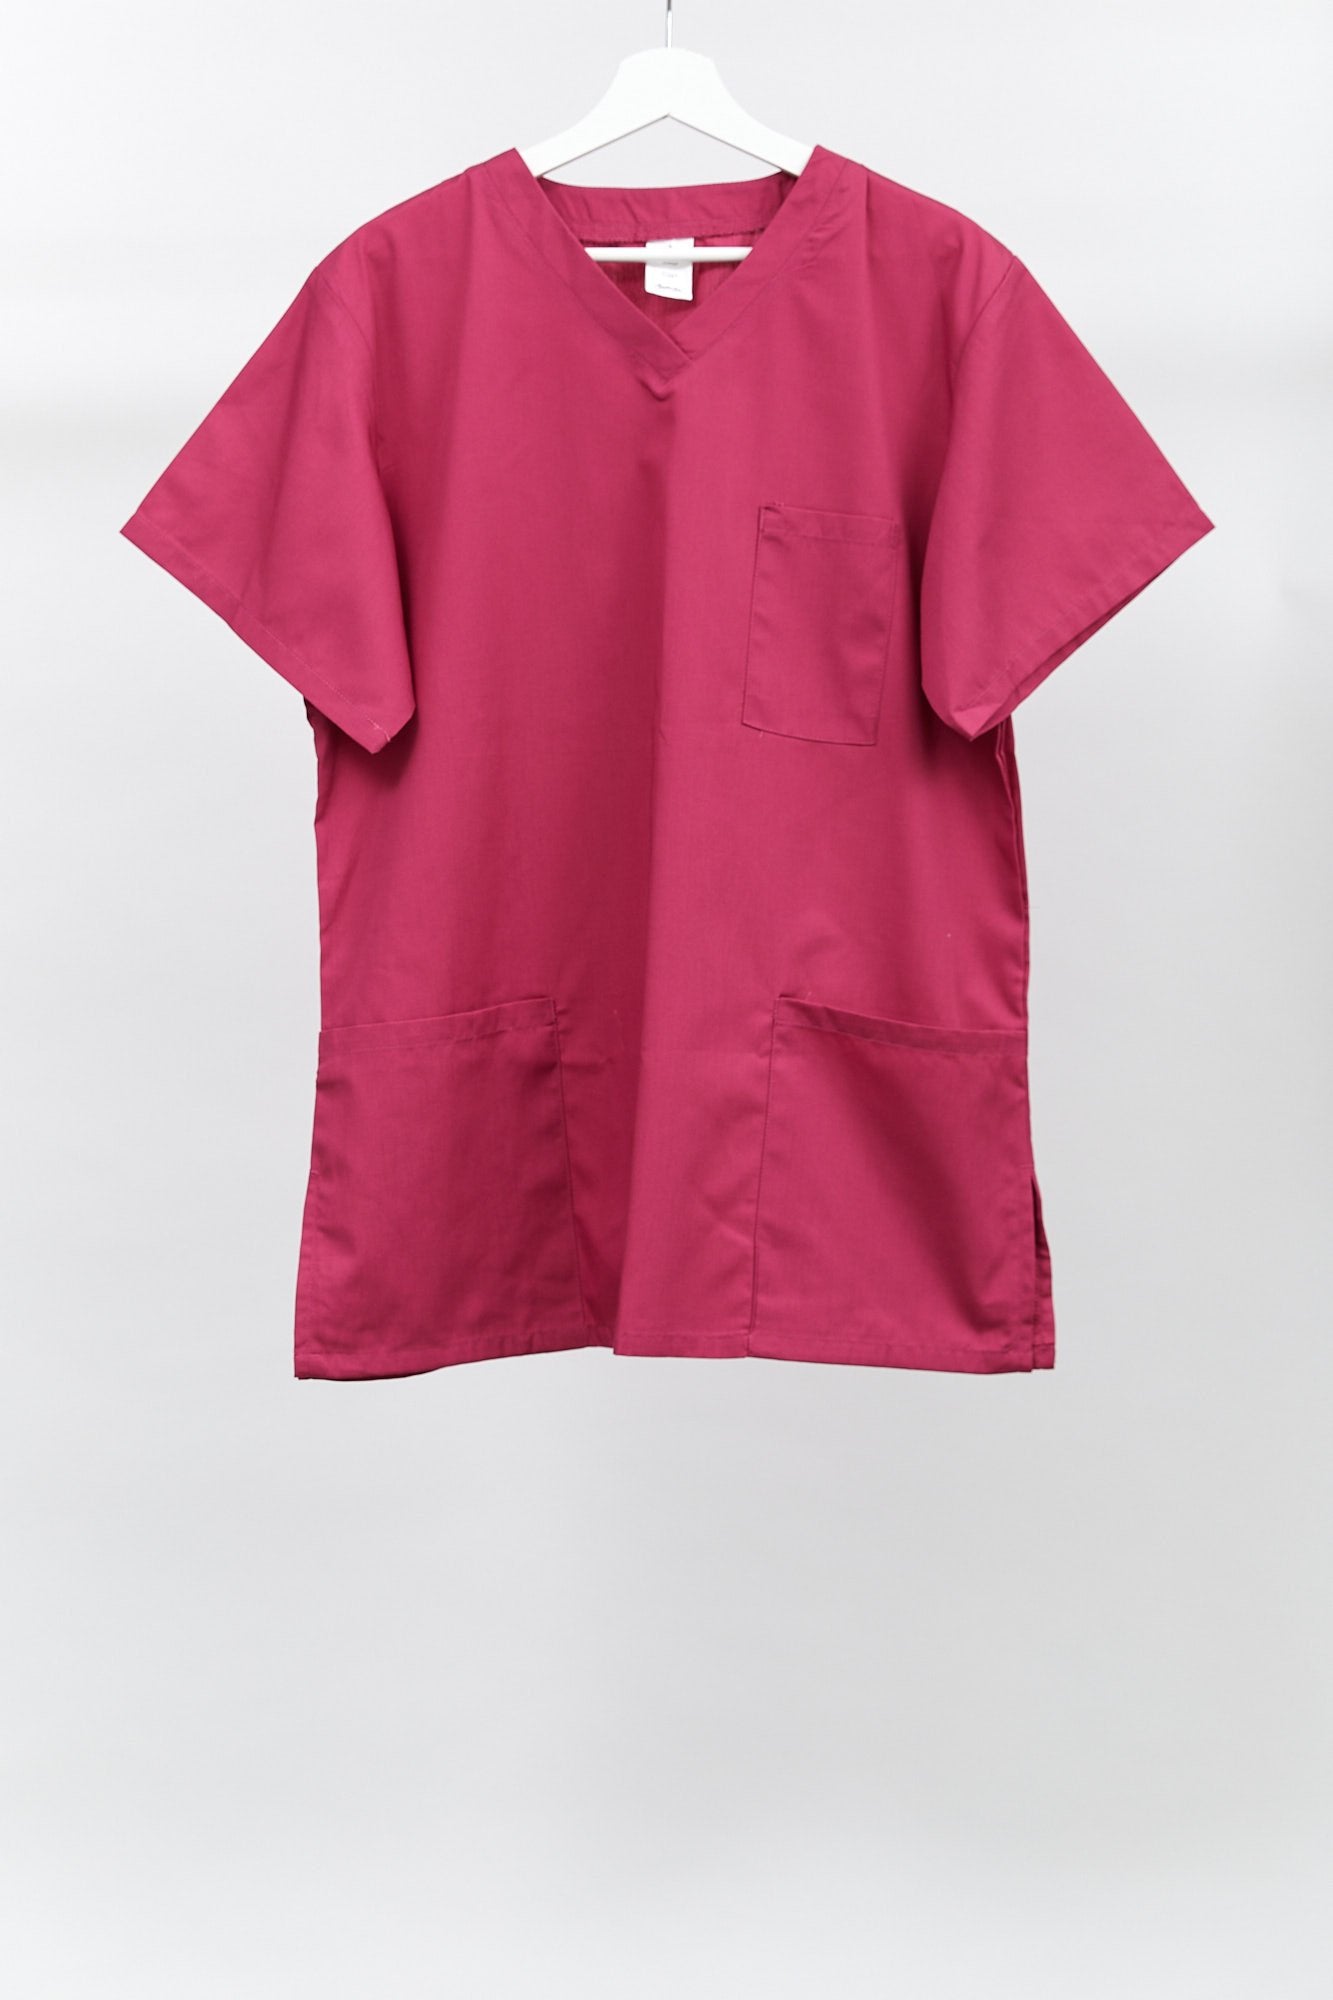 Pink scrubs uniform top: size medium